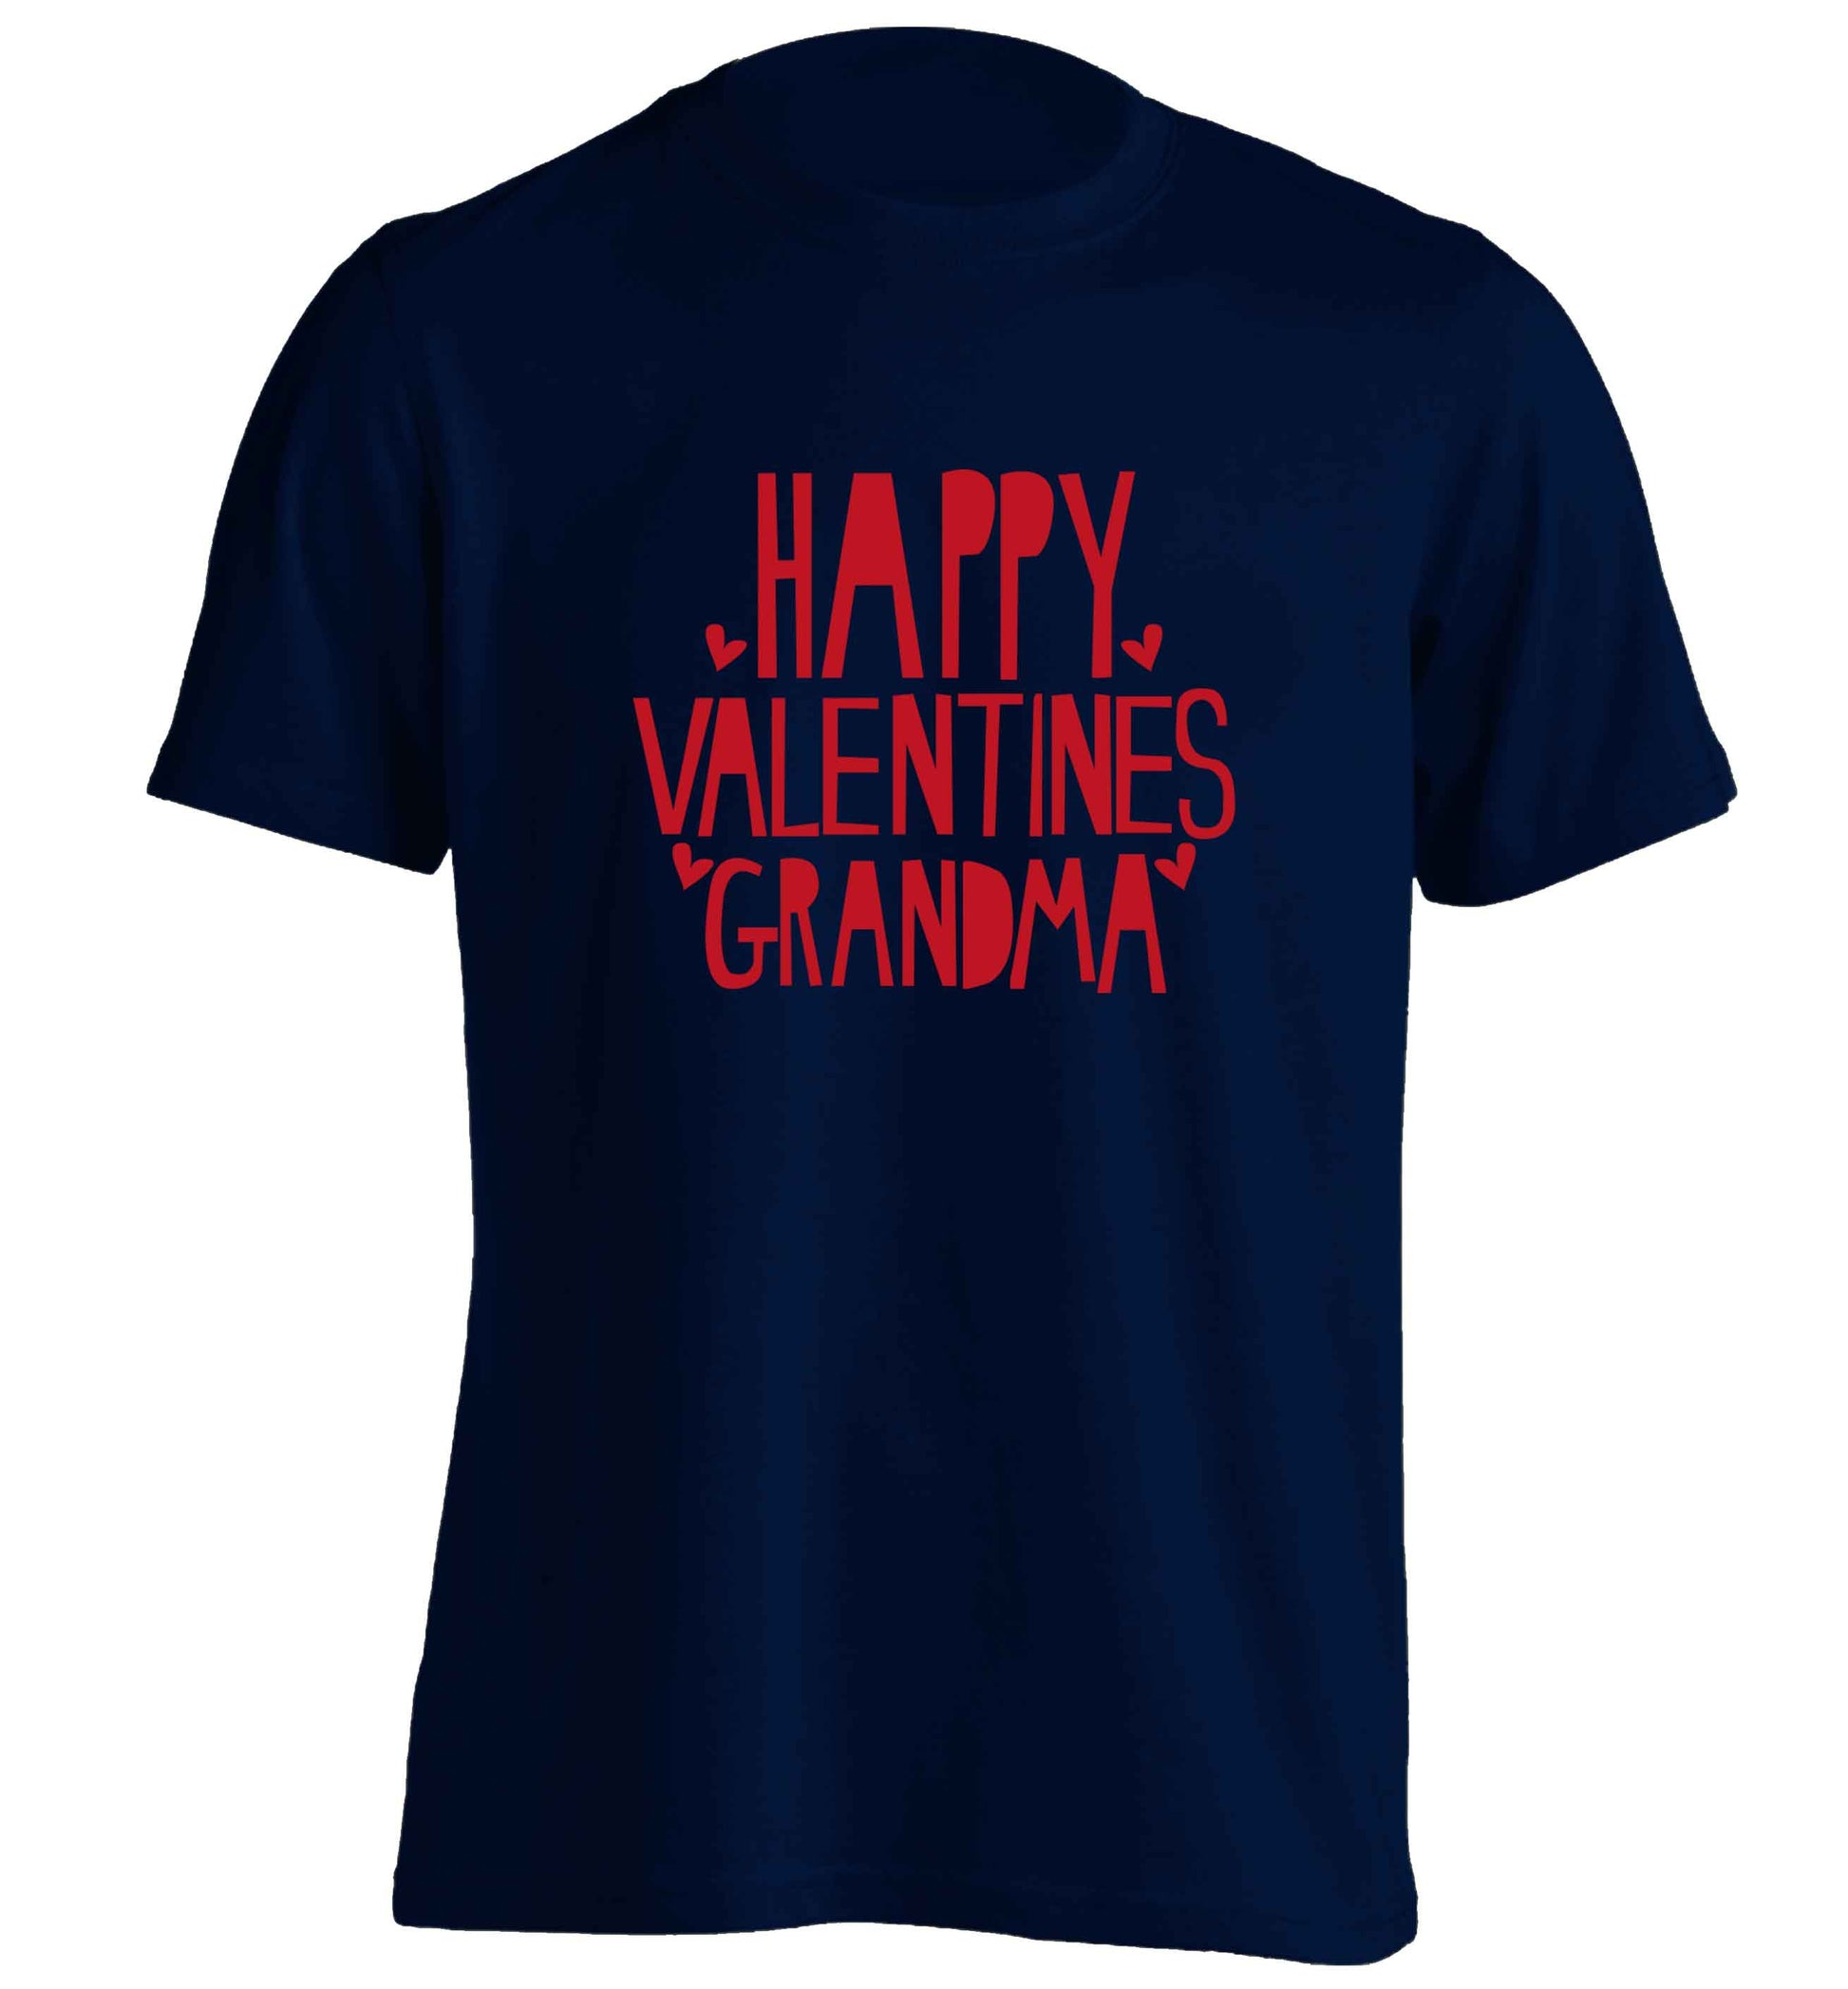 Happy valentines grandma adults unisex navy Tshirt 2XL